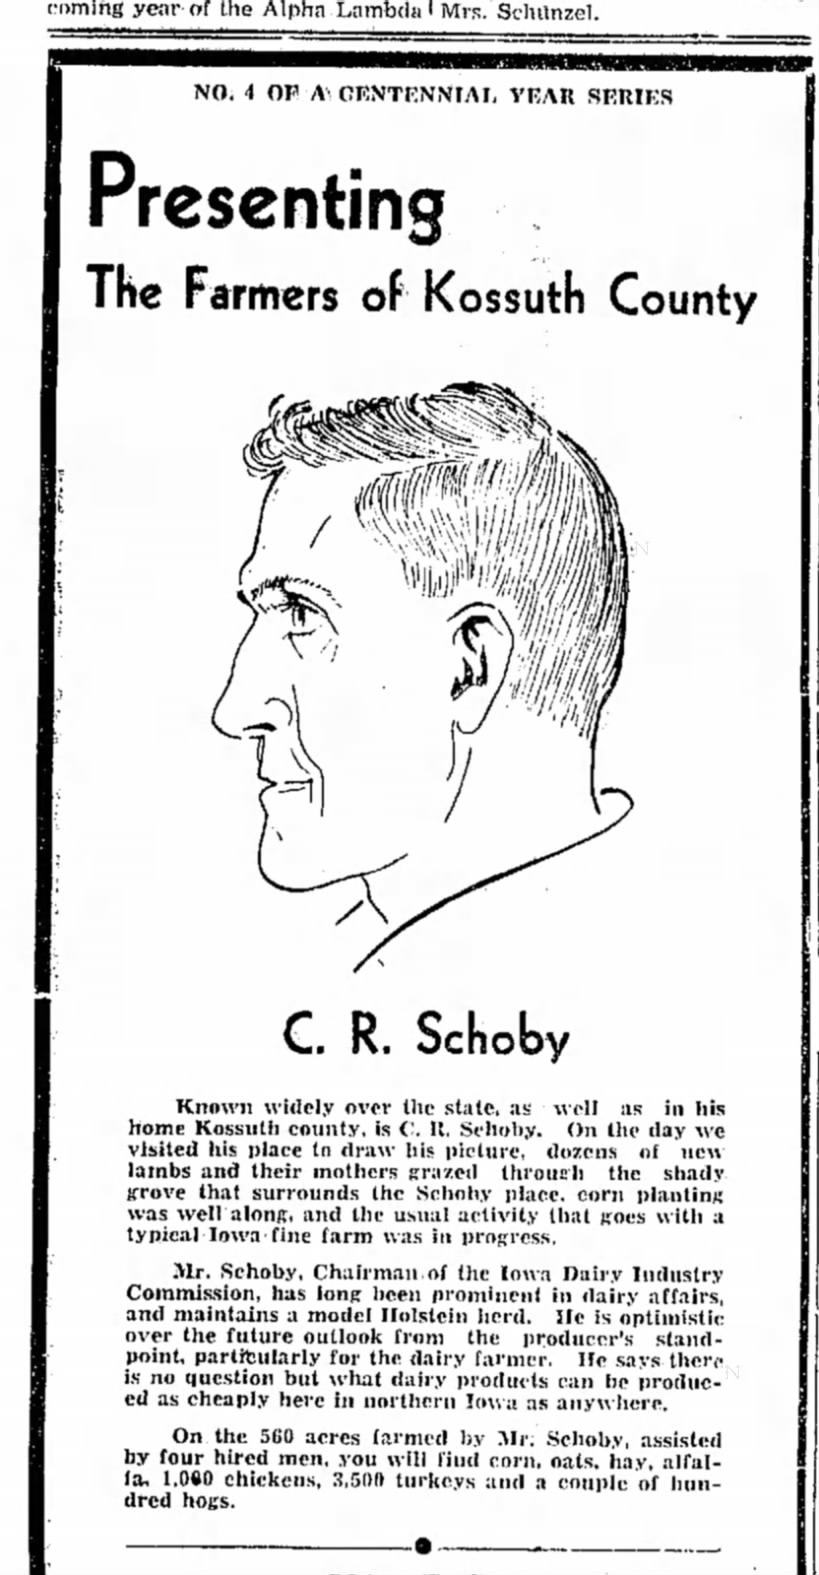 C. R. Schoby